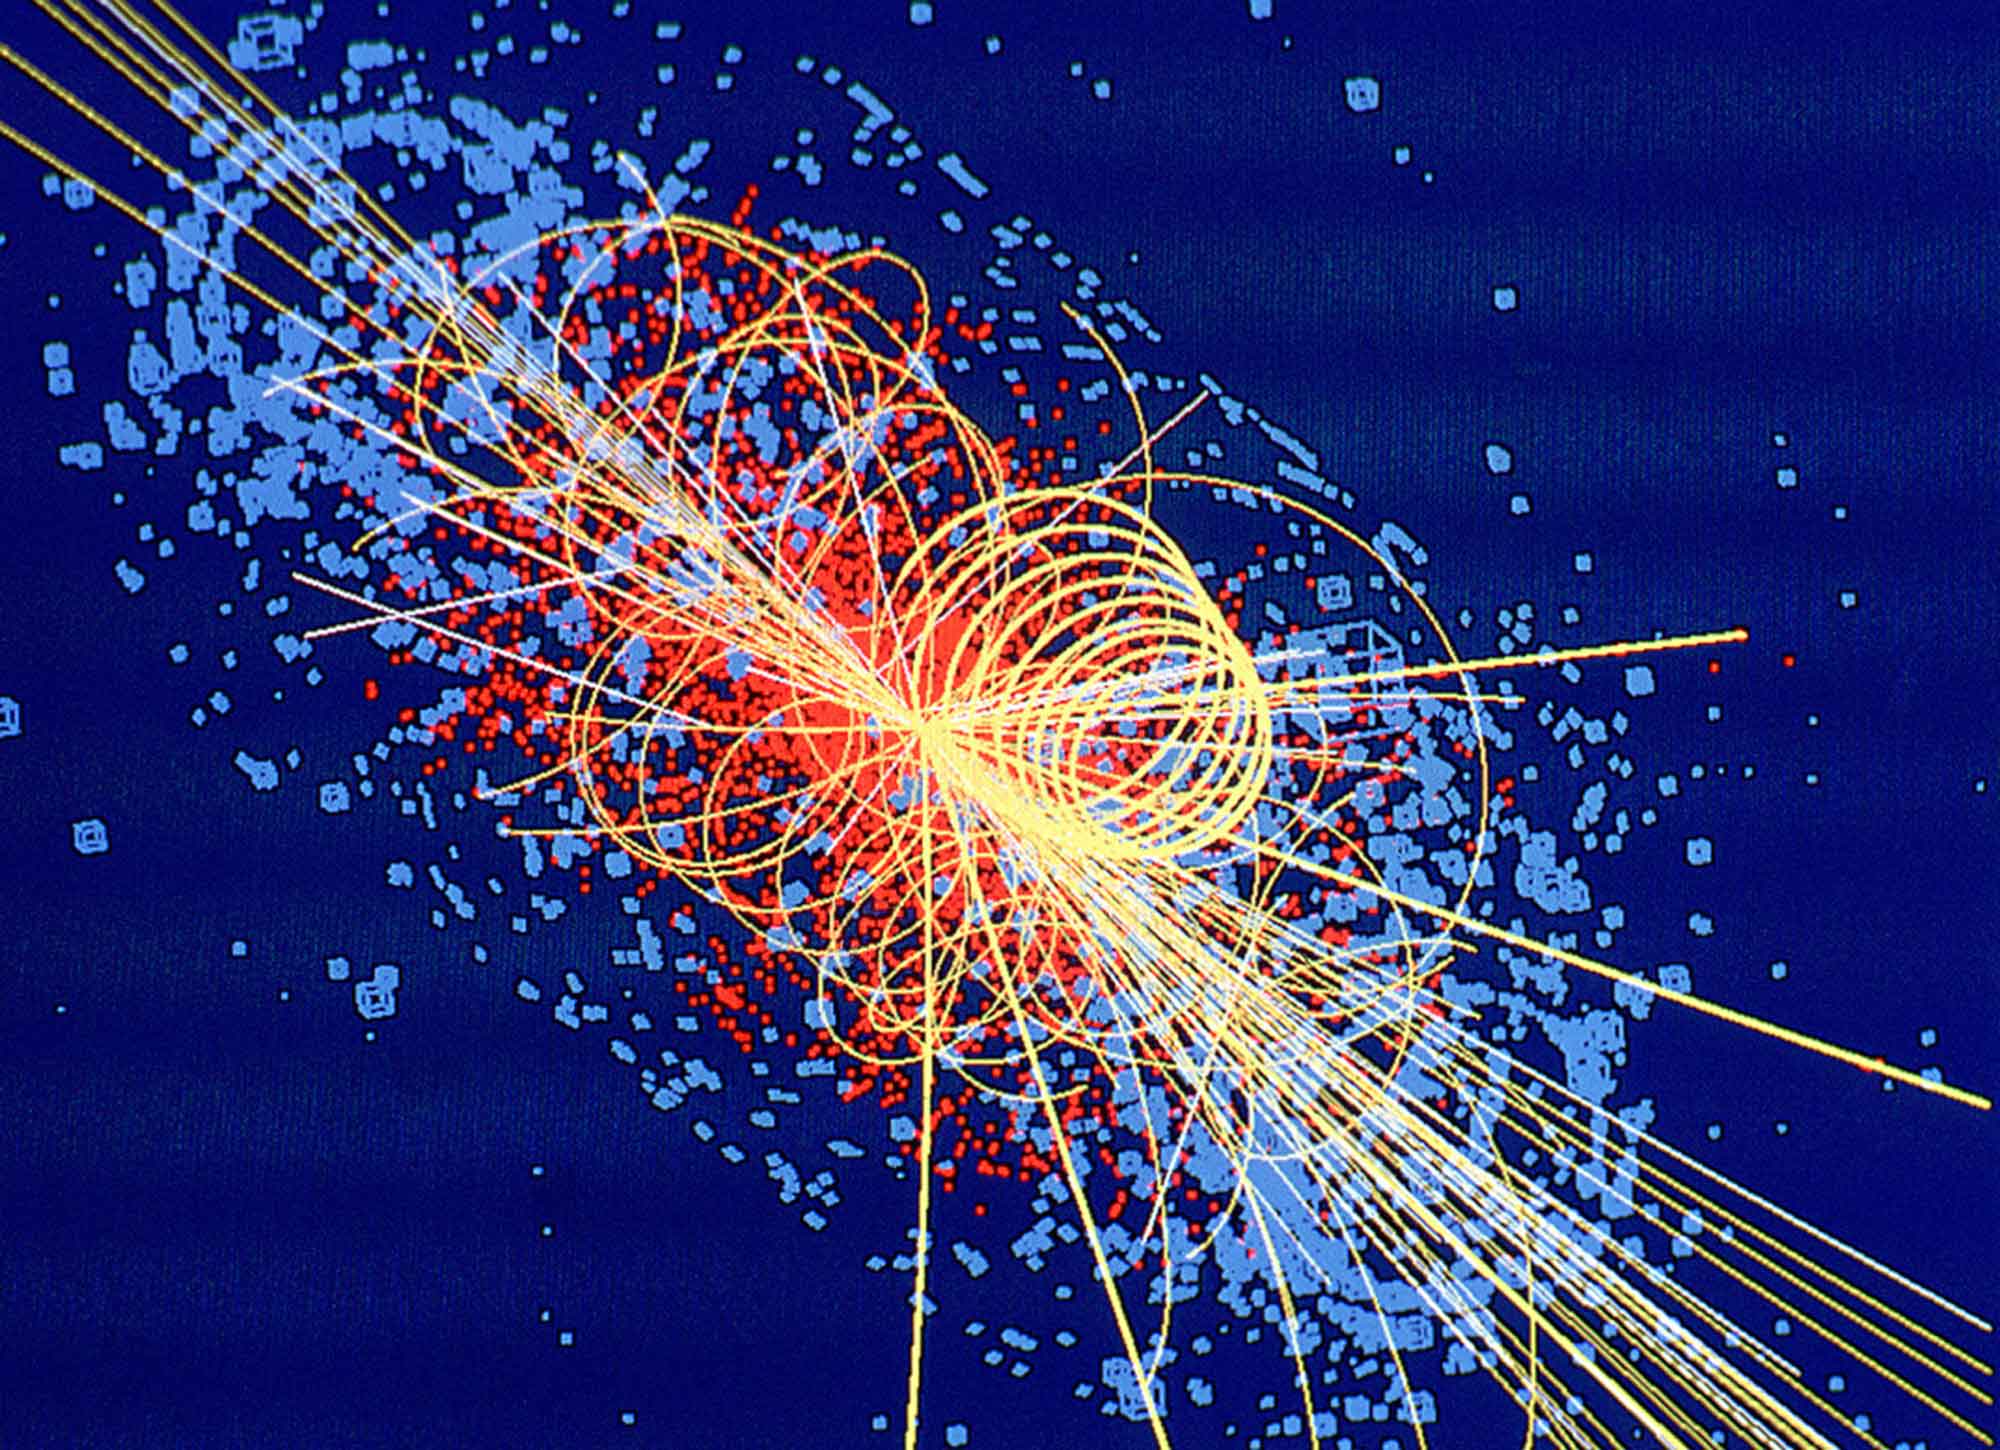 higgs-simulation-3.jpg